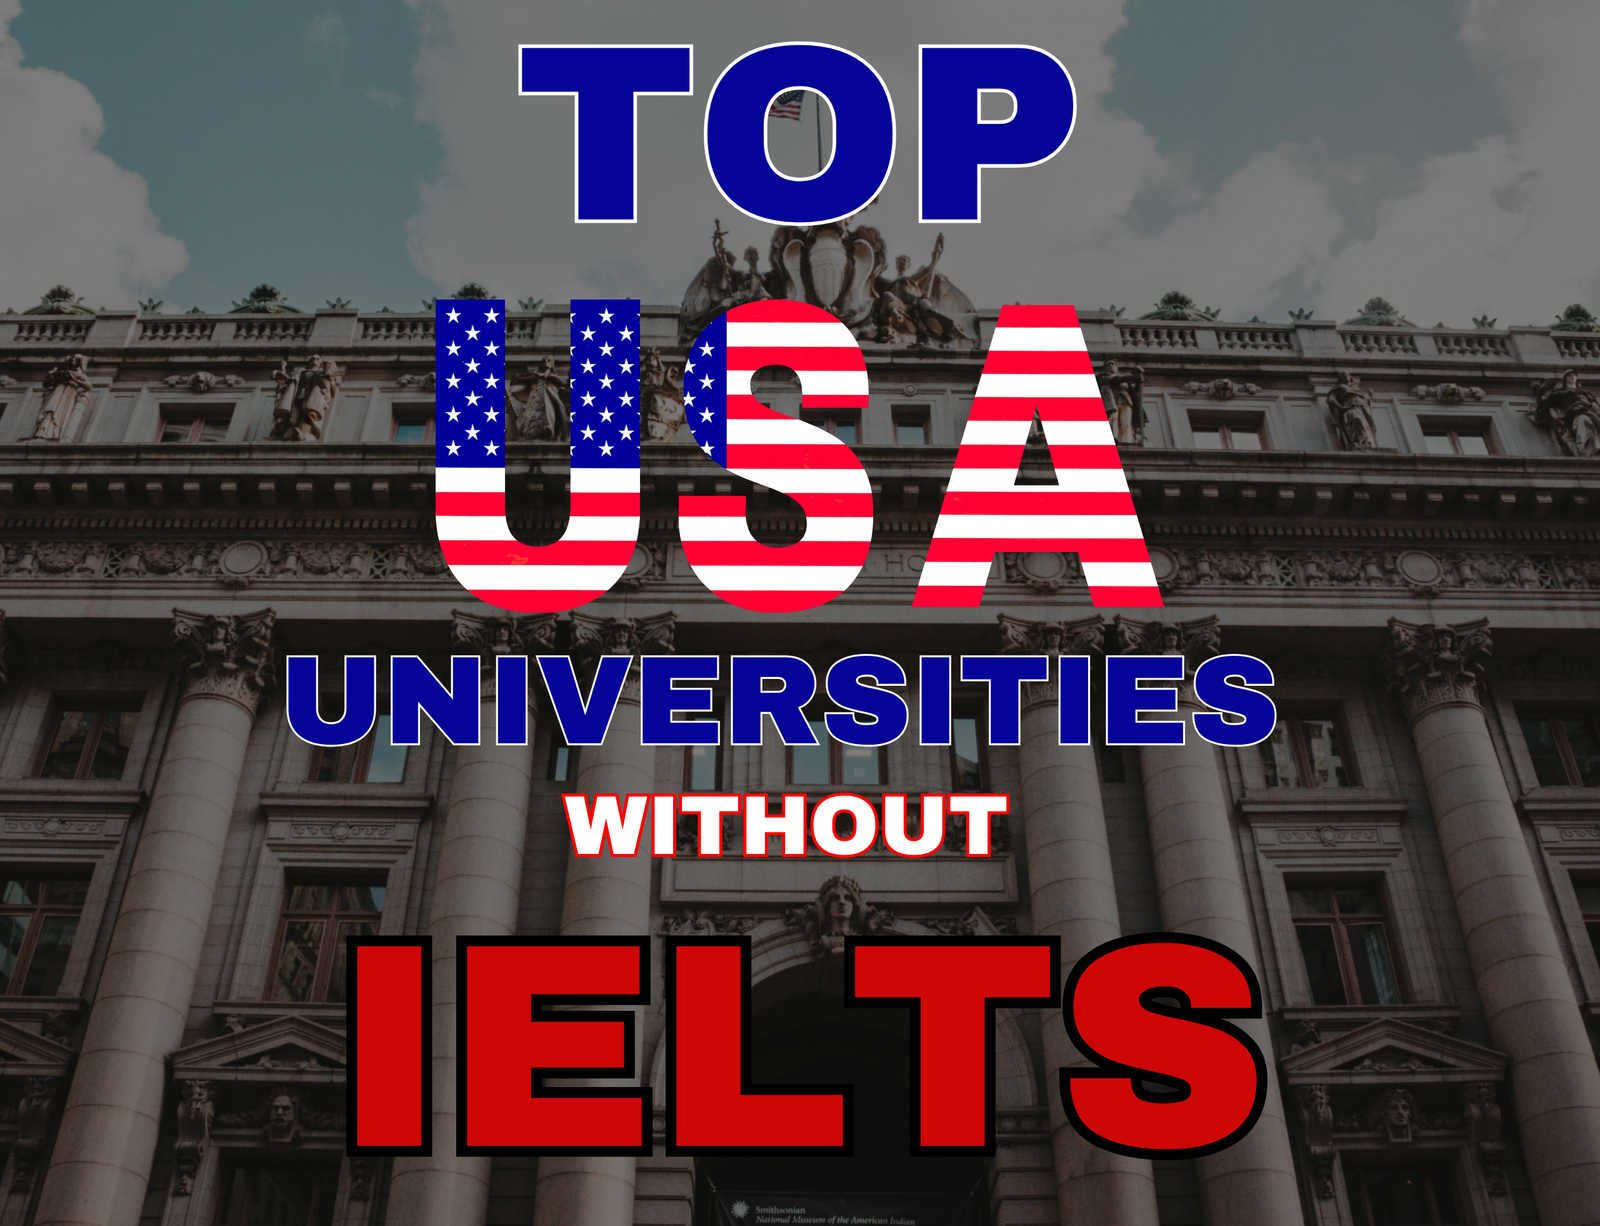 USA universities withoput IELTS